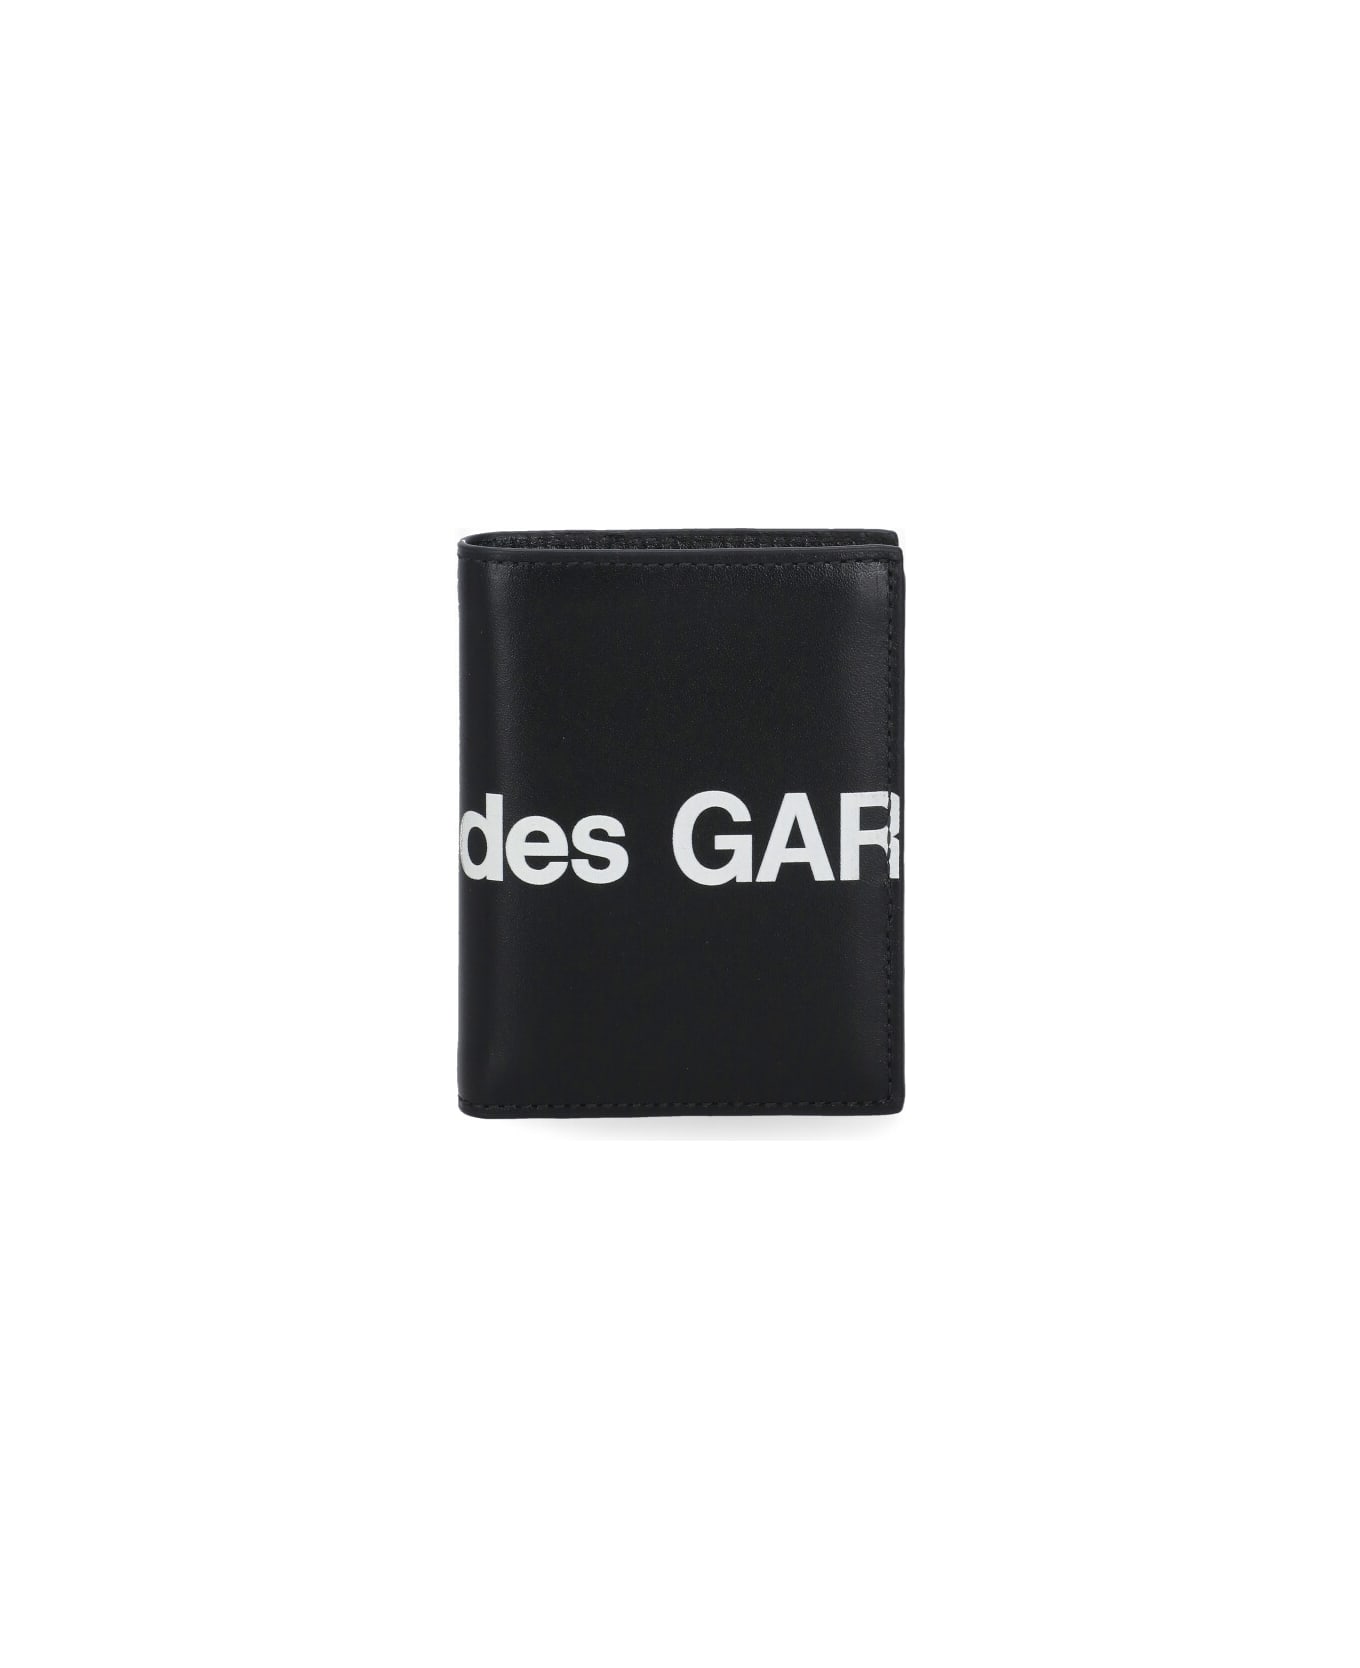 Comme des Garçons Wallet Wallet With Logo - Black